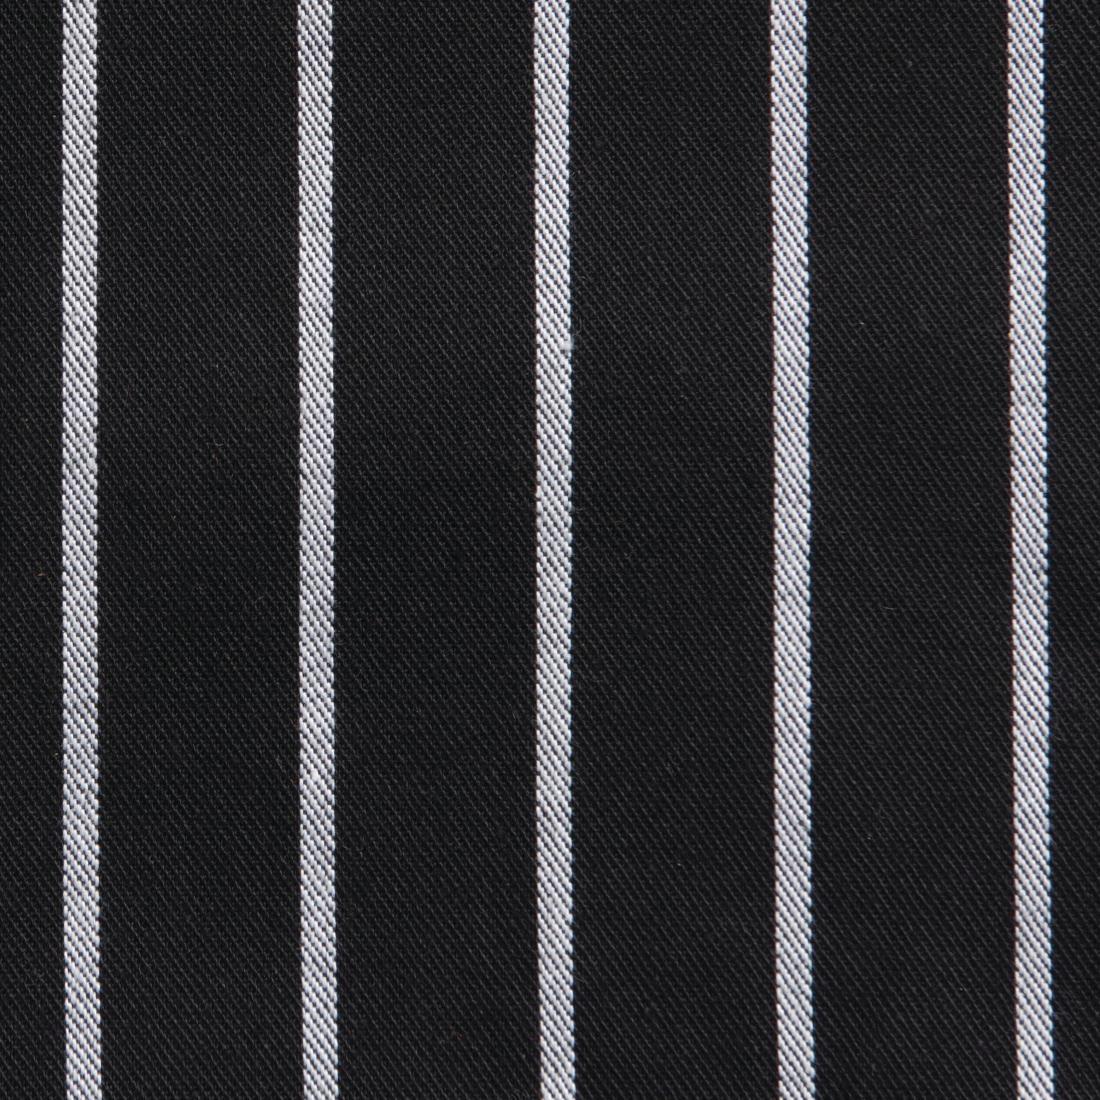 Chef Works Premium Woven Bib Apron Black and White Stripe - B248  - 3